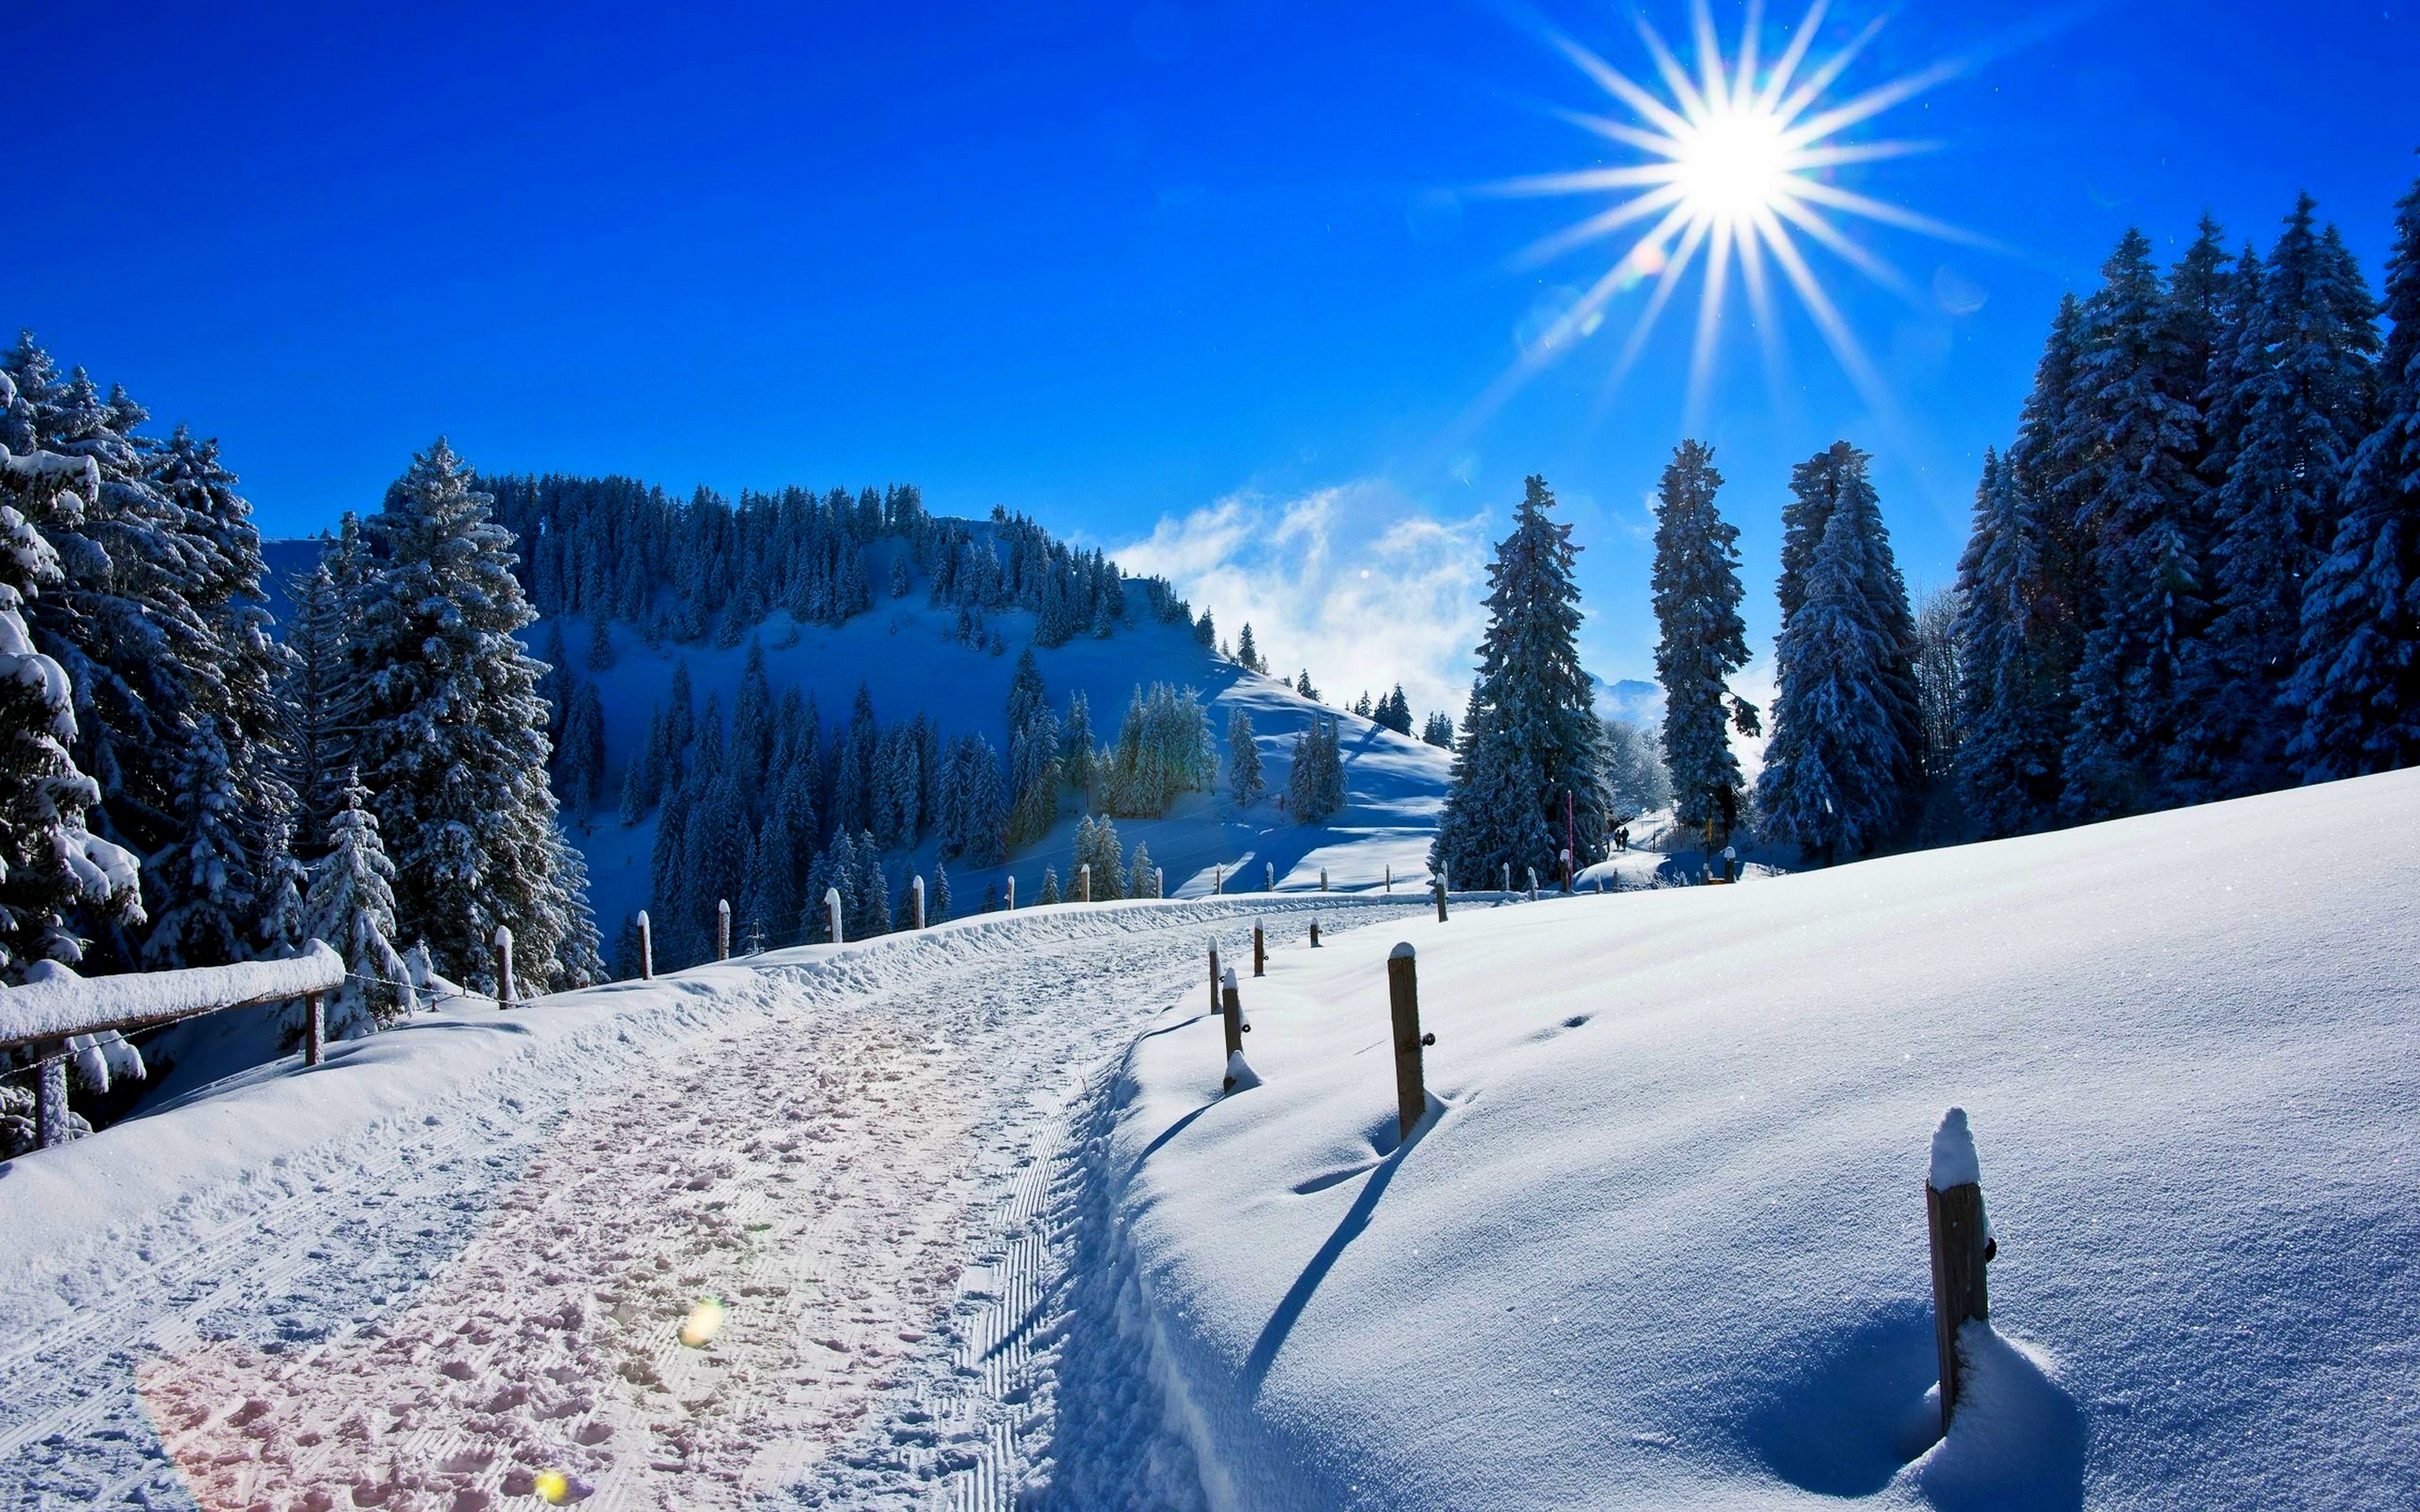 Январские сугробы. Зима. Природа зима. Красивая зима. Снежная зима.